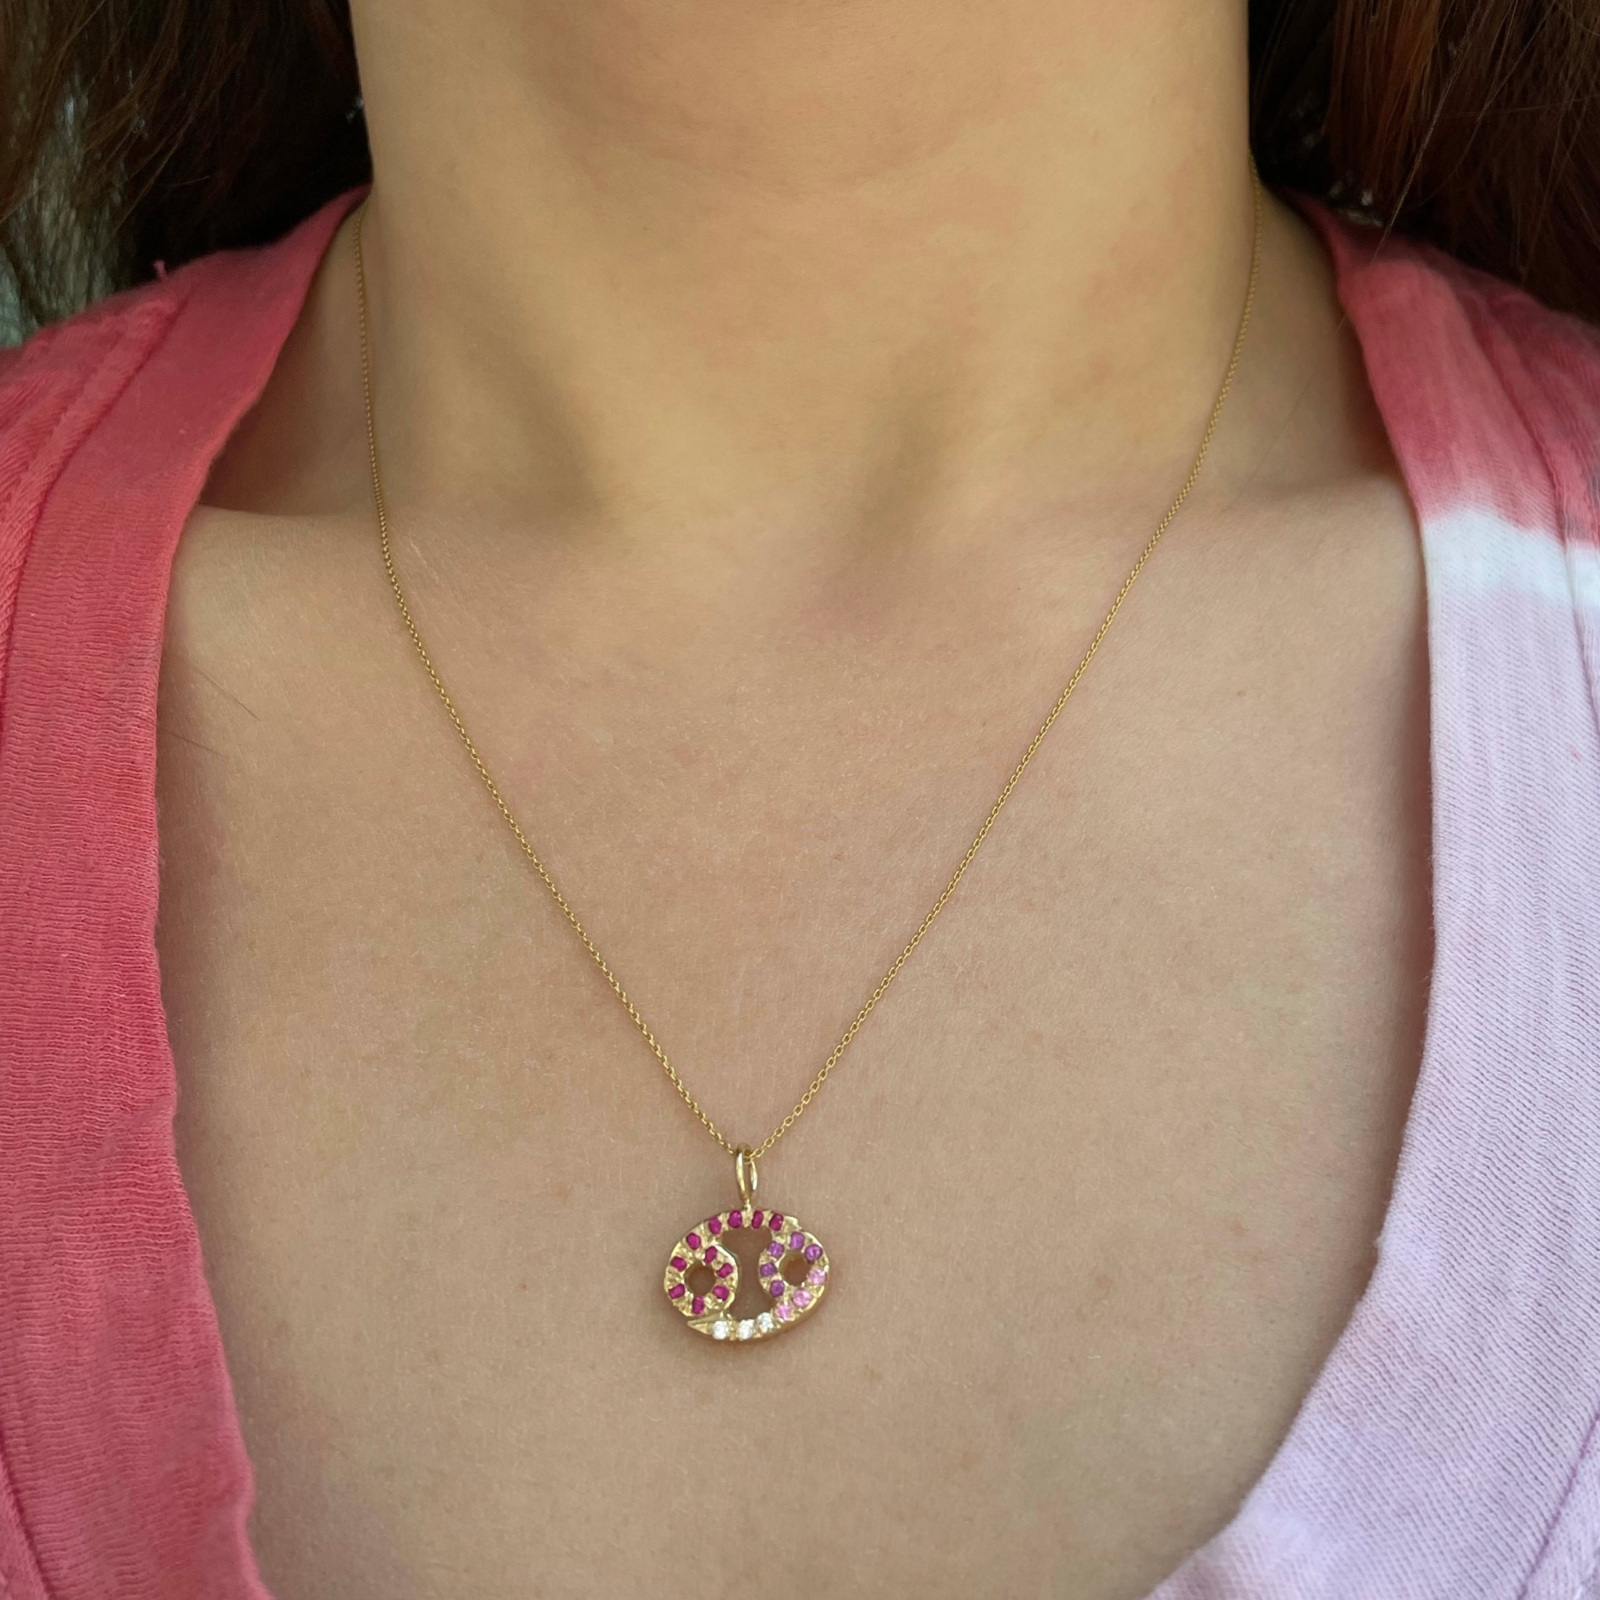 Cancer zodiac sign charm pendant necklace